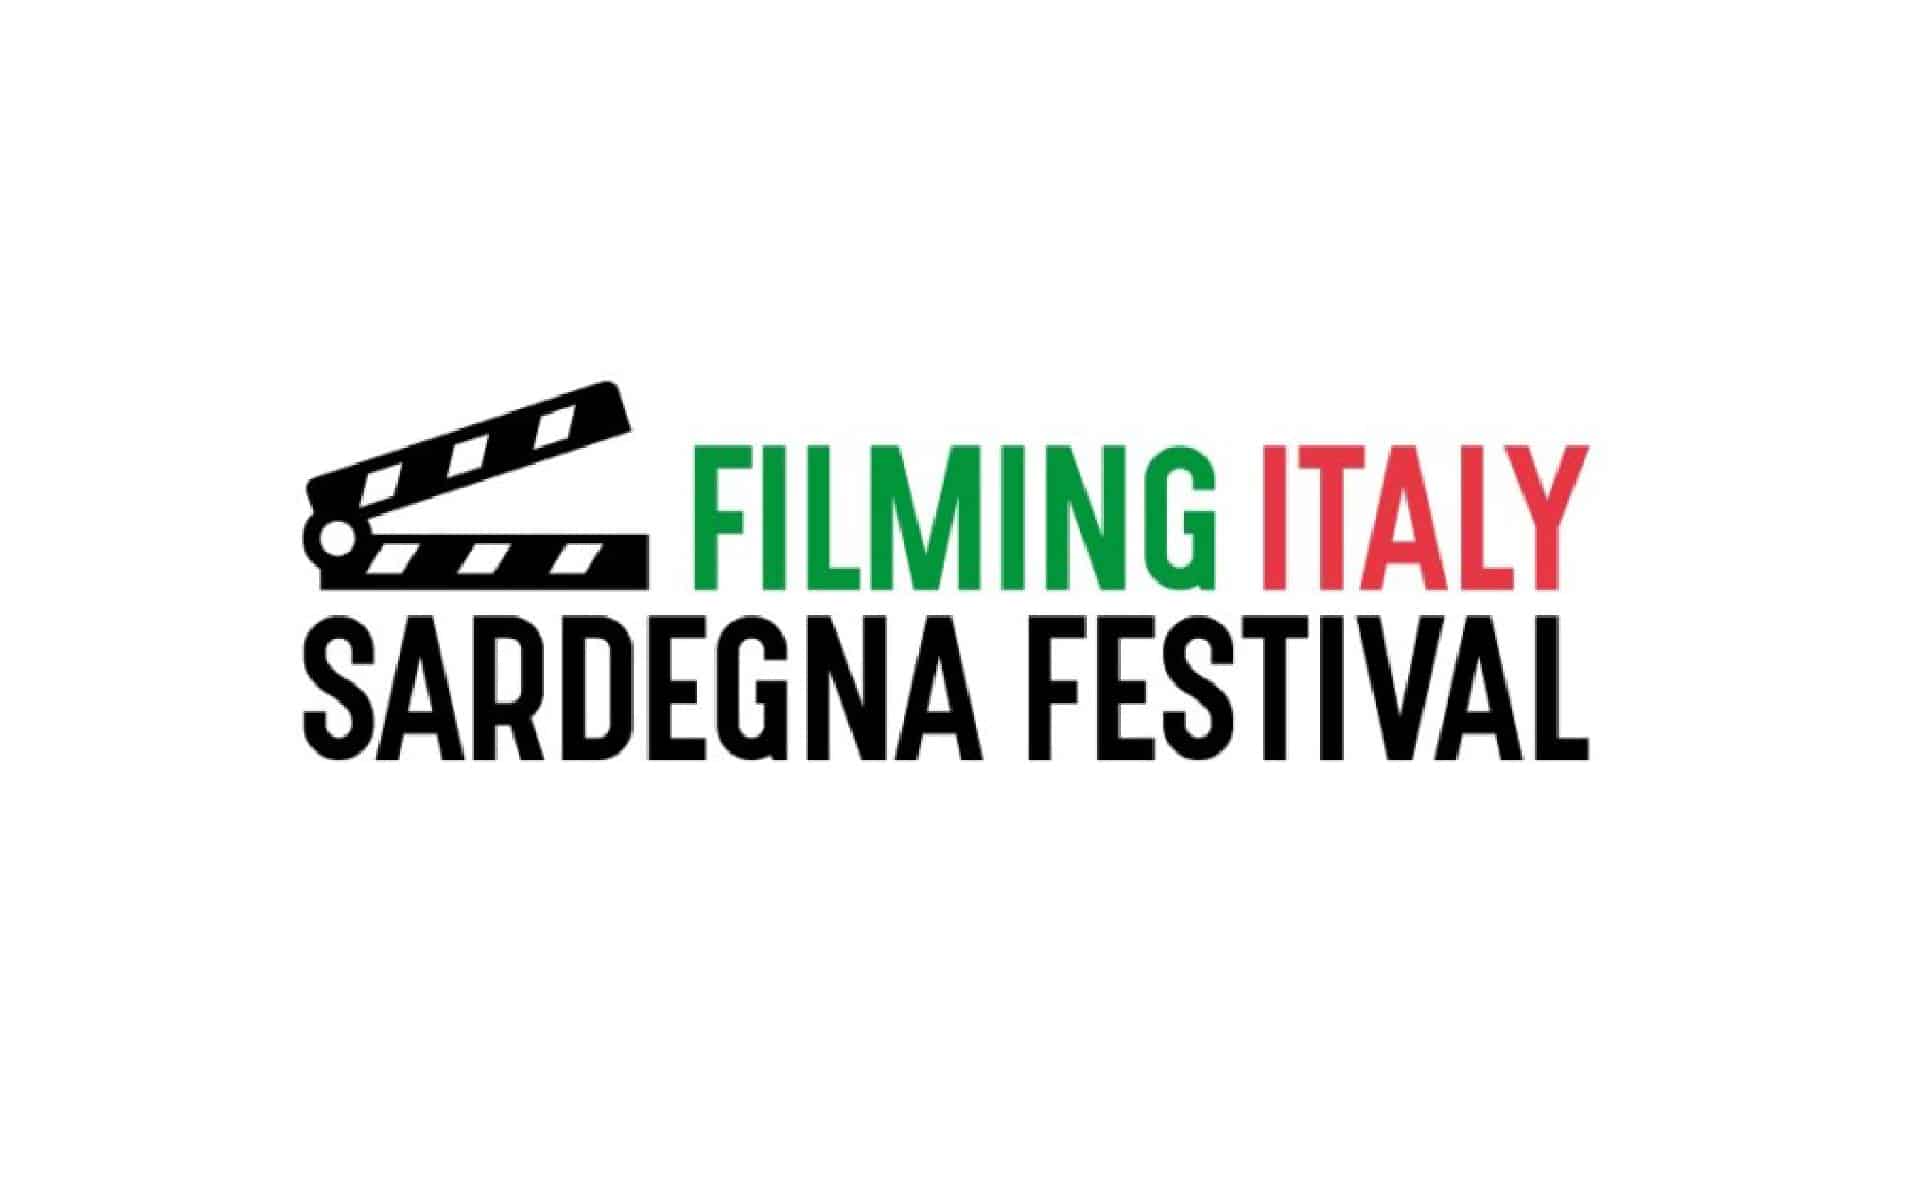 Filming Italy Sardegna Festival